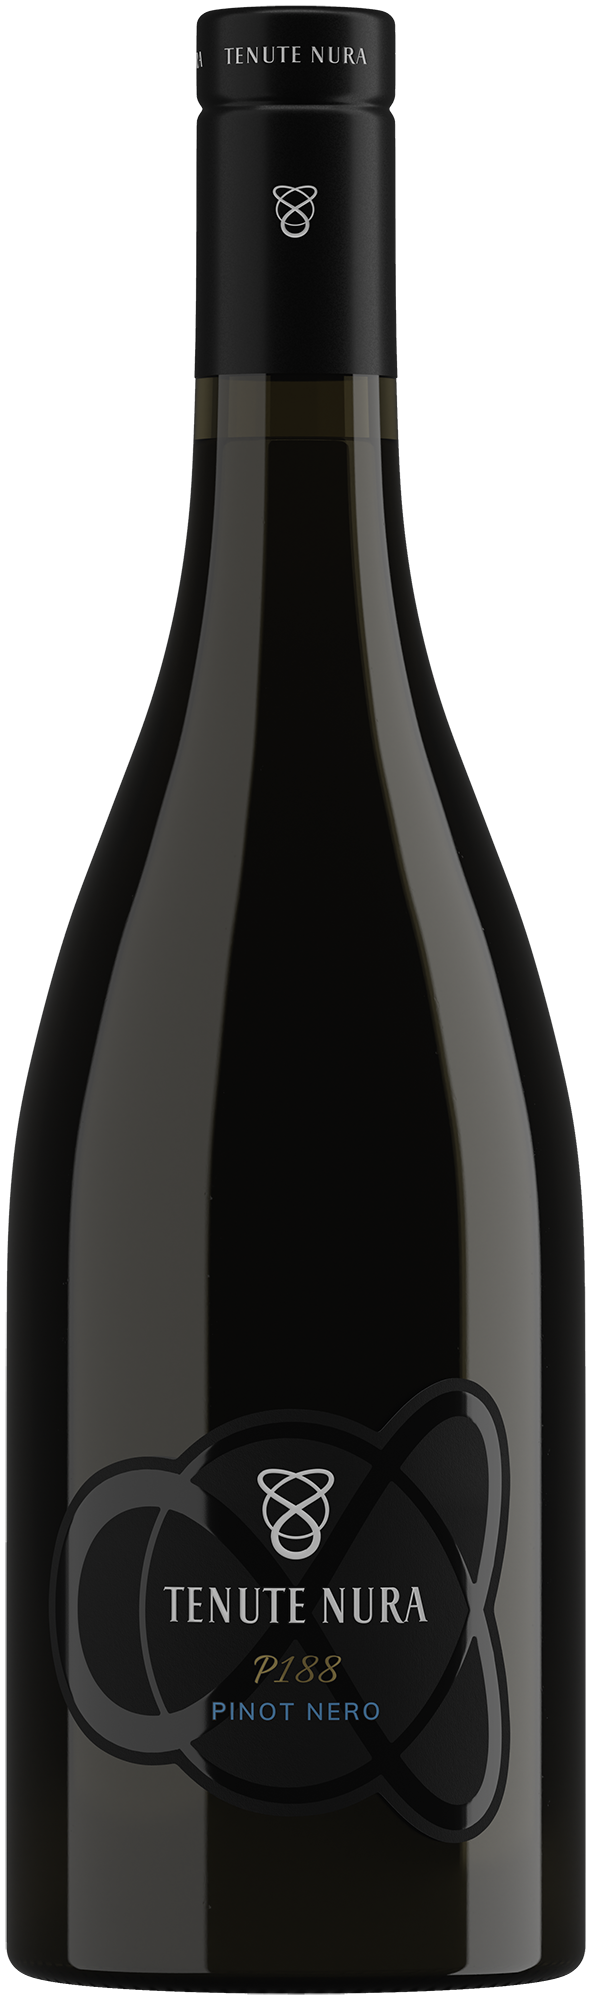 Tenute Nura P188 Pinot Nero